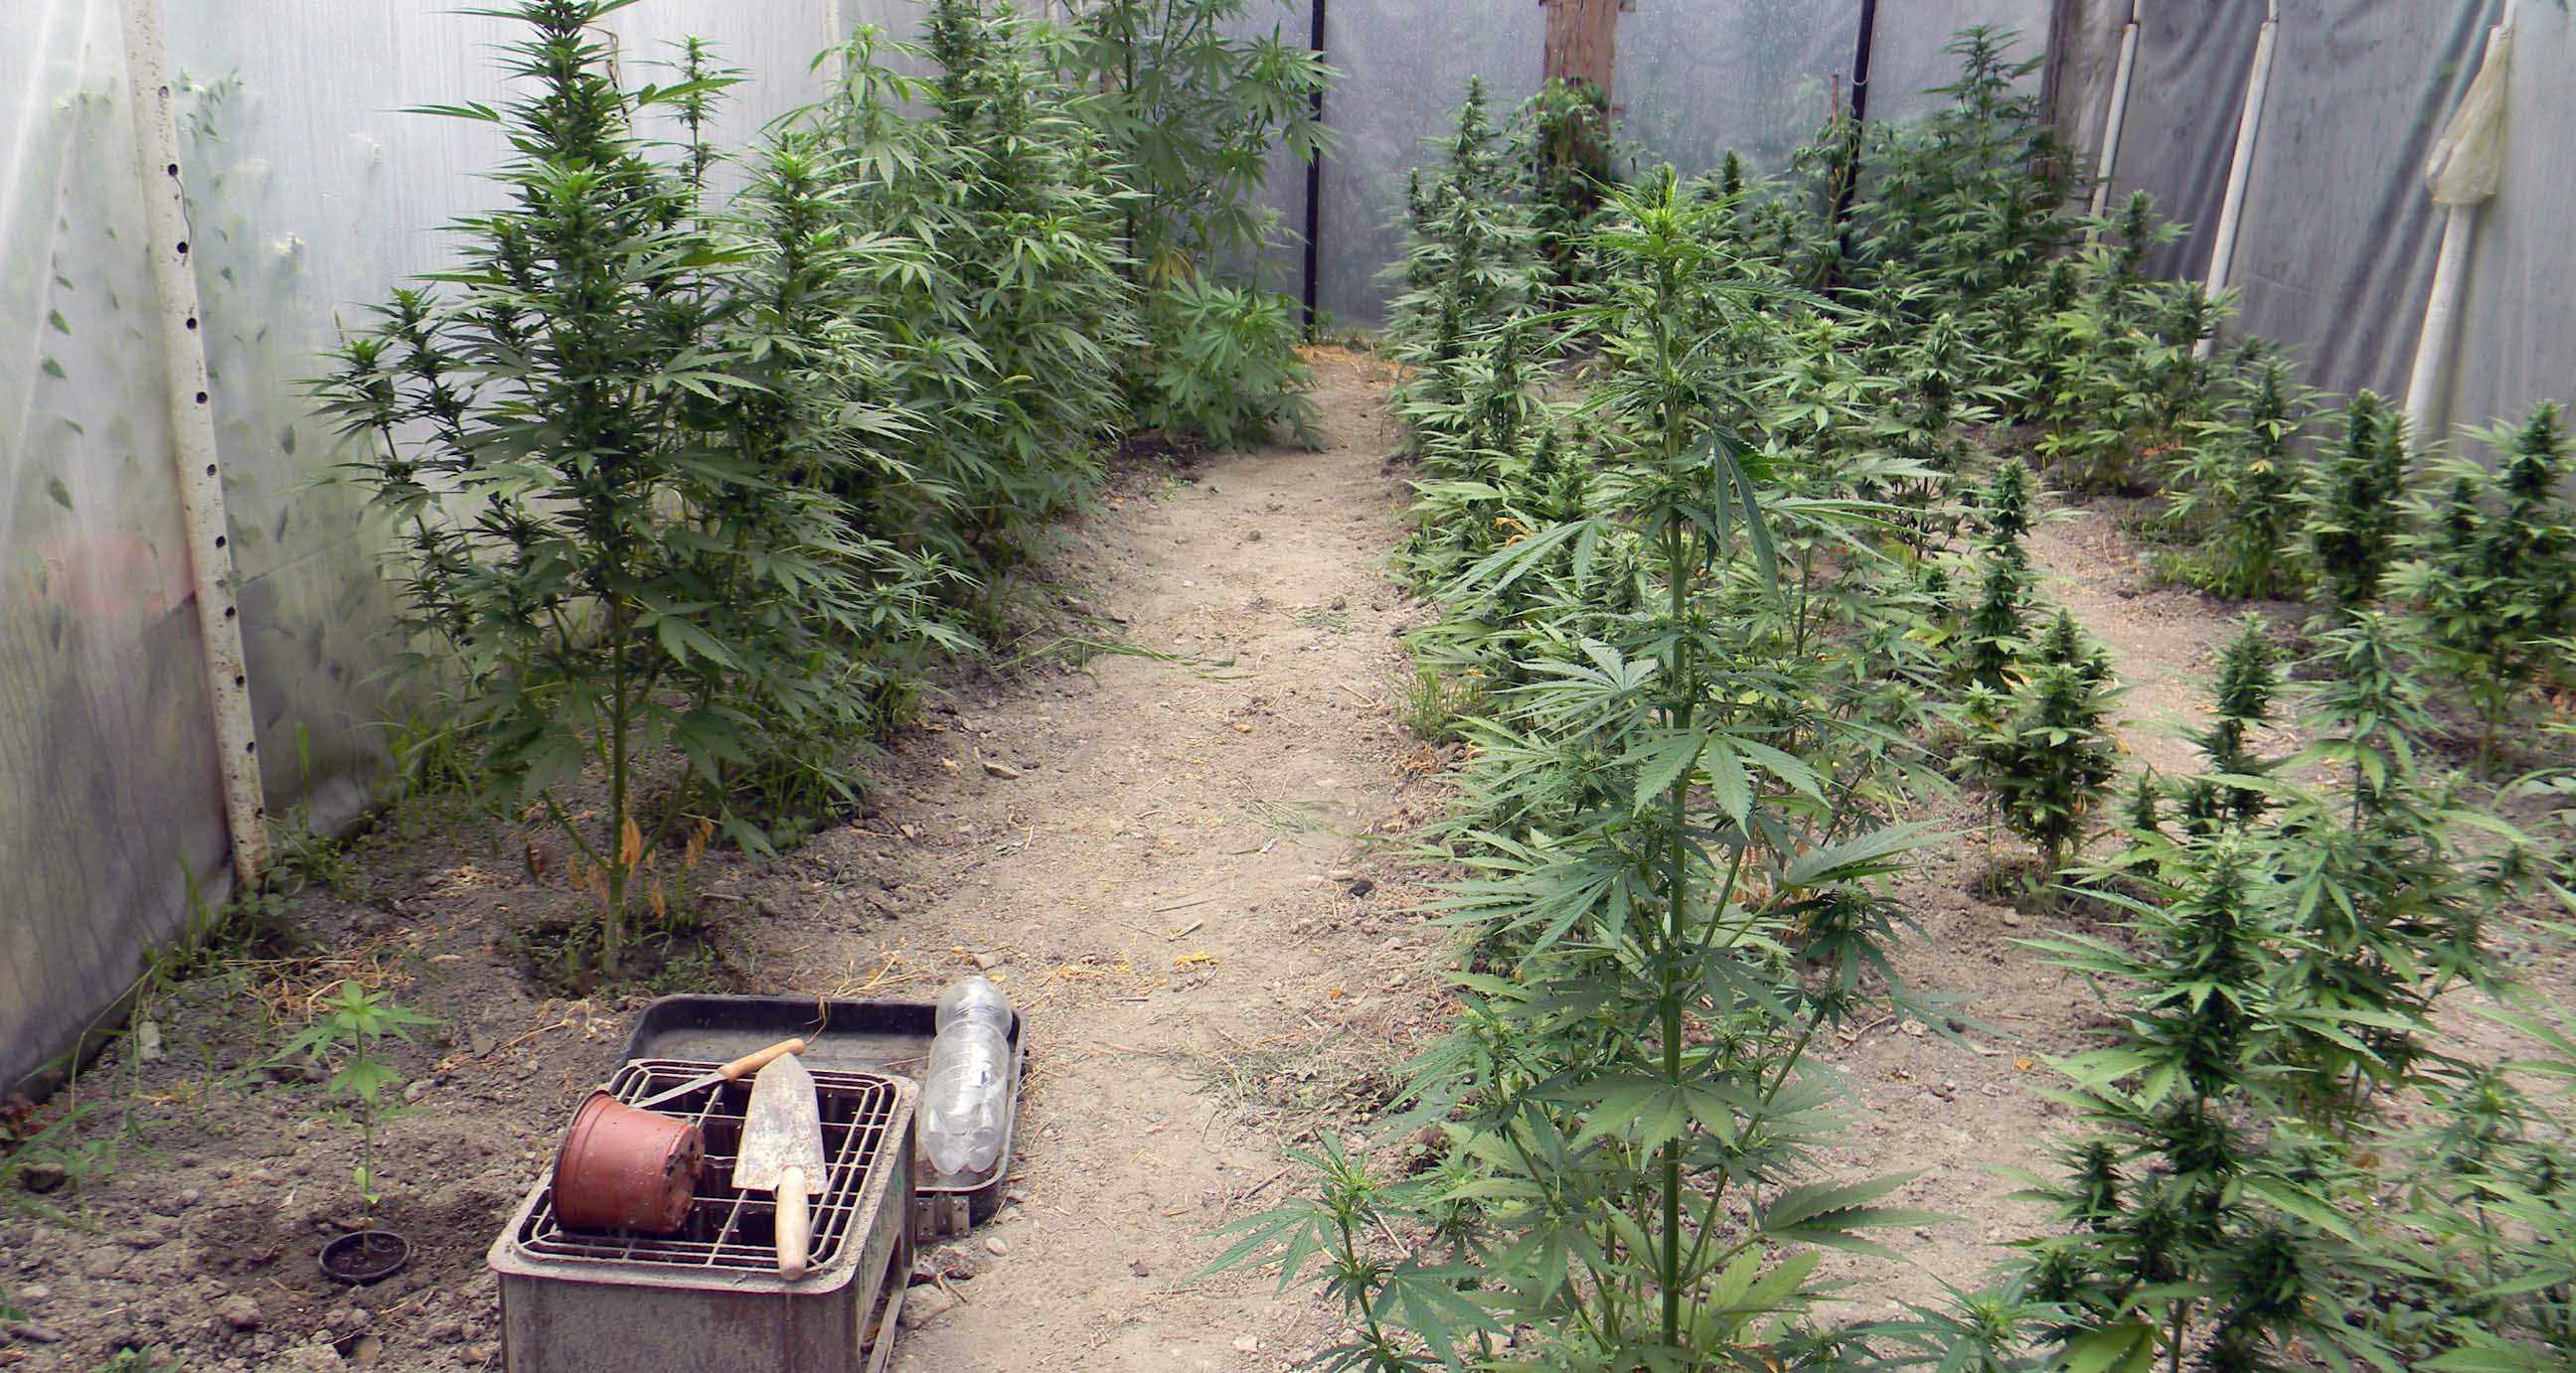 Pronađene stabljike marihuane